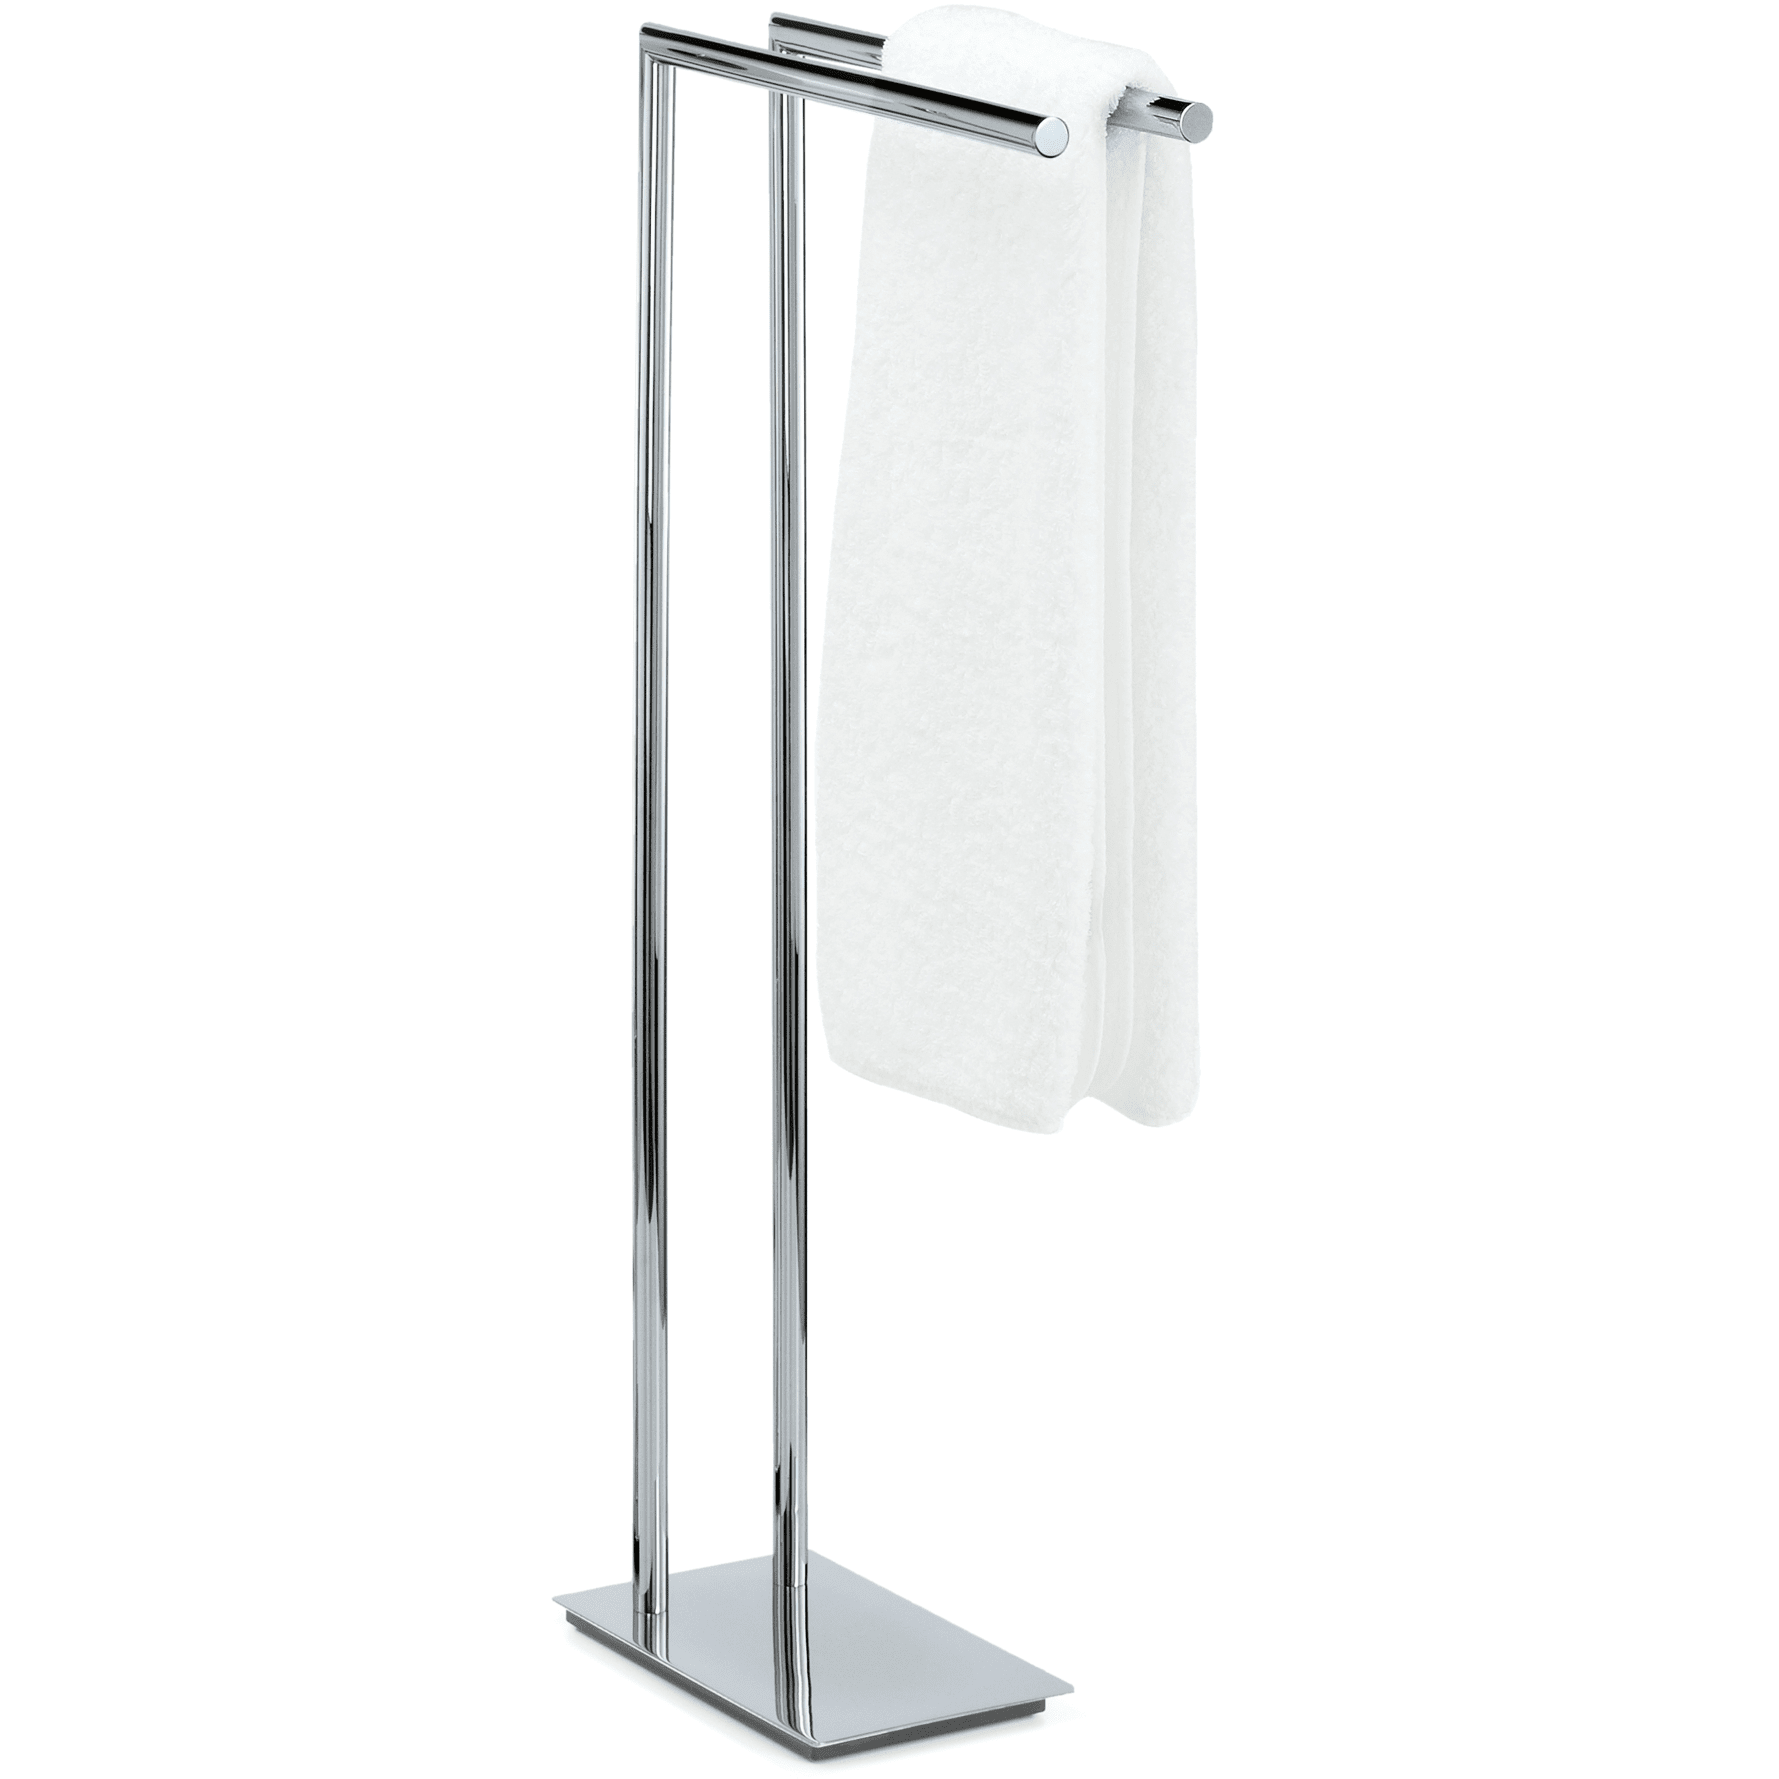 towel holder stand amazon